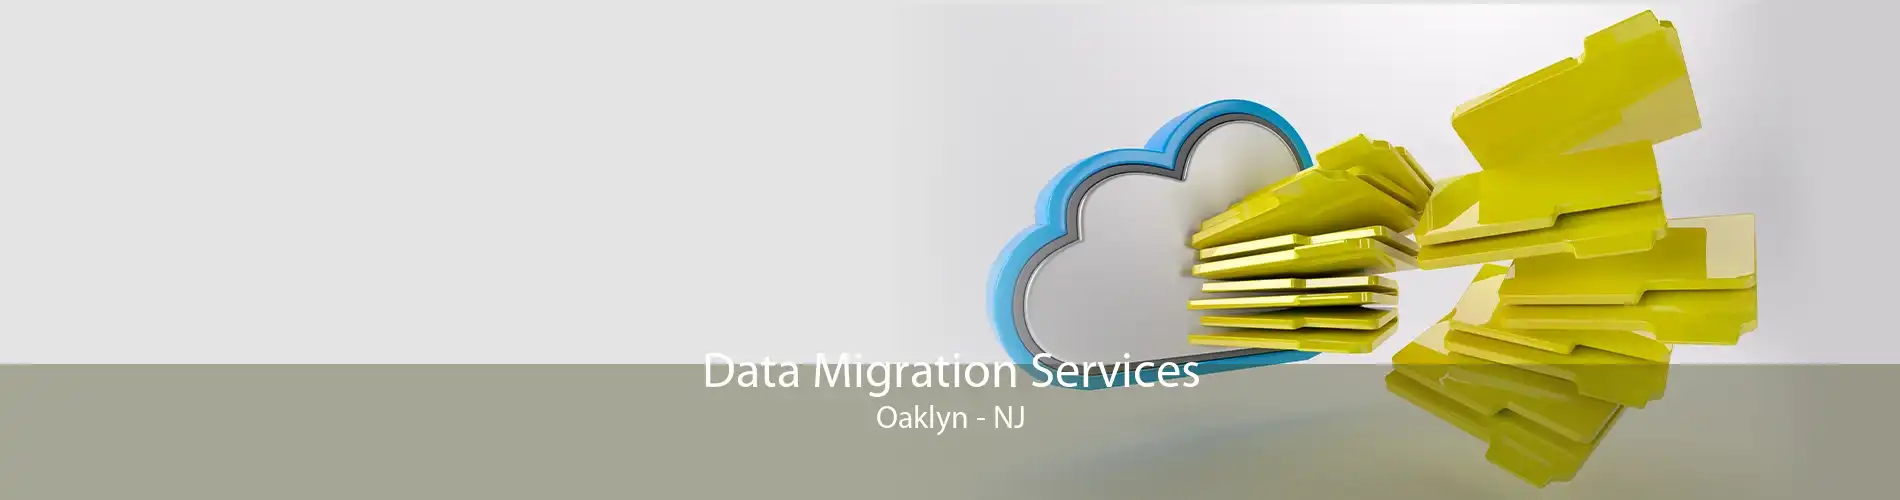 Data Migration Services Oaklyn - NJ